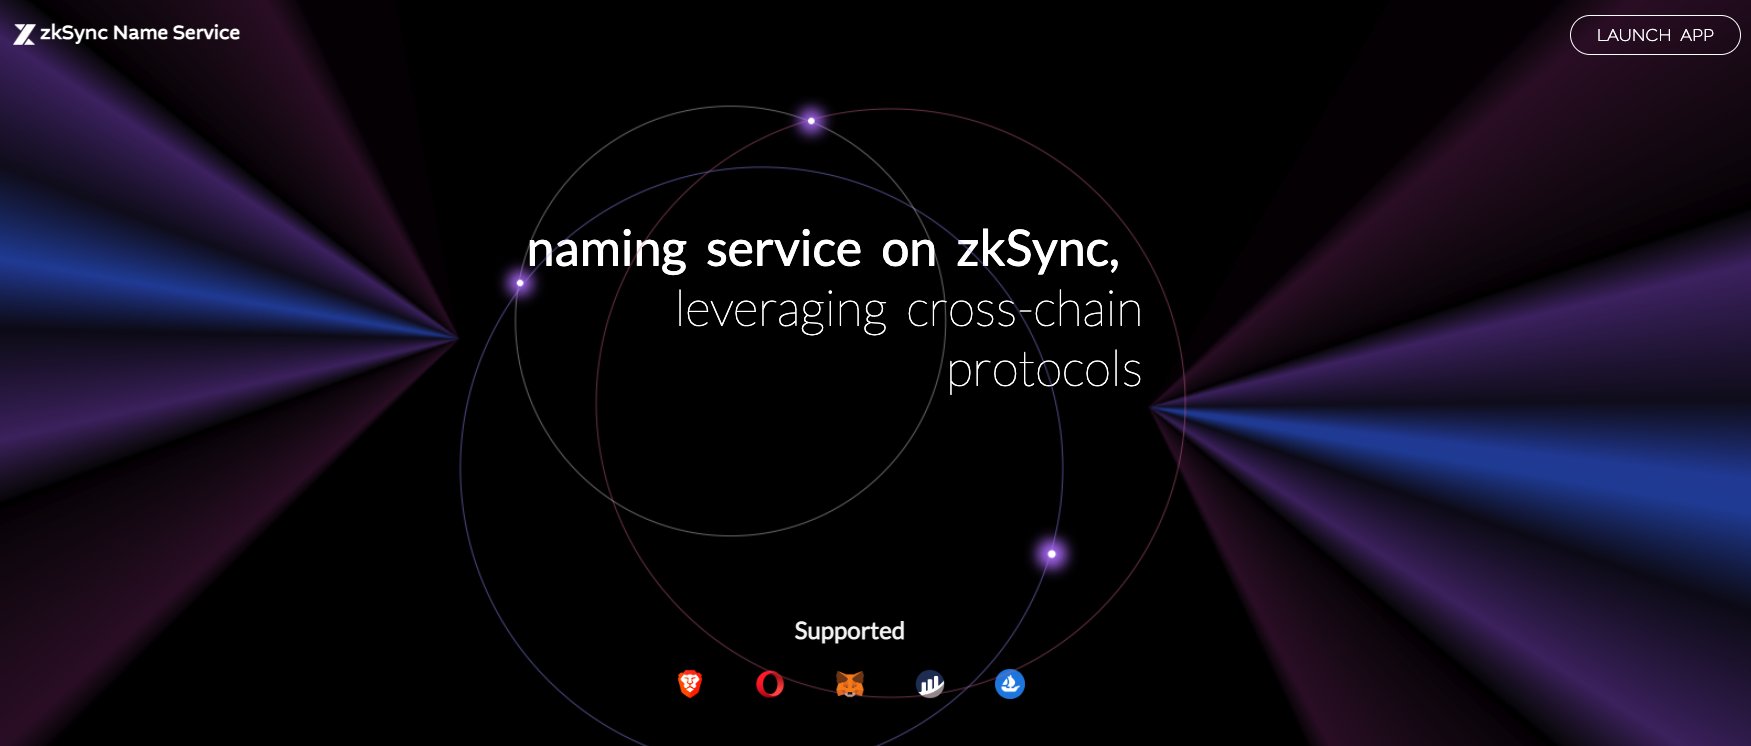 zkSync Name Service